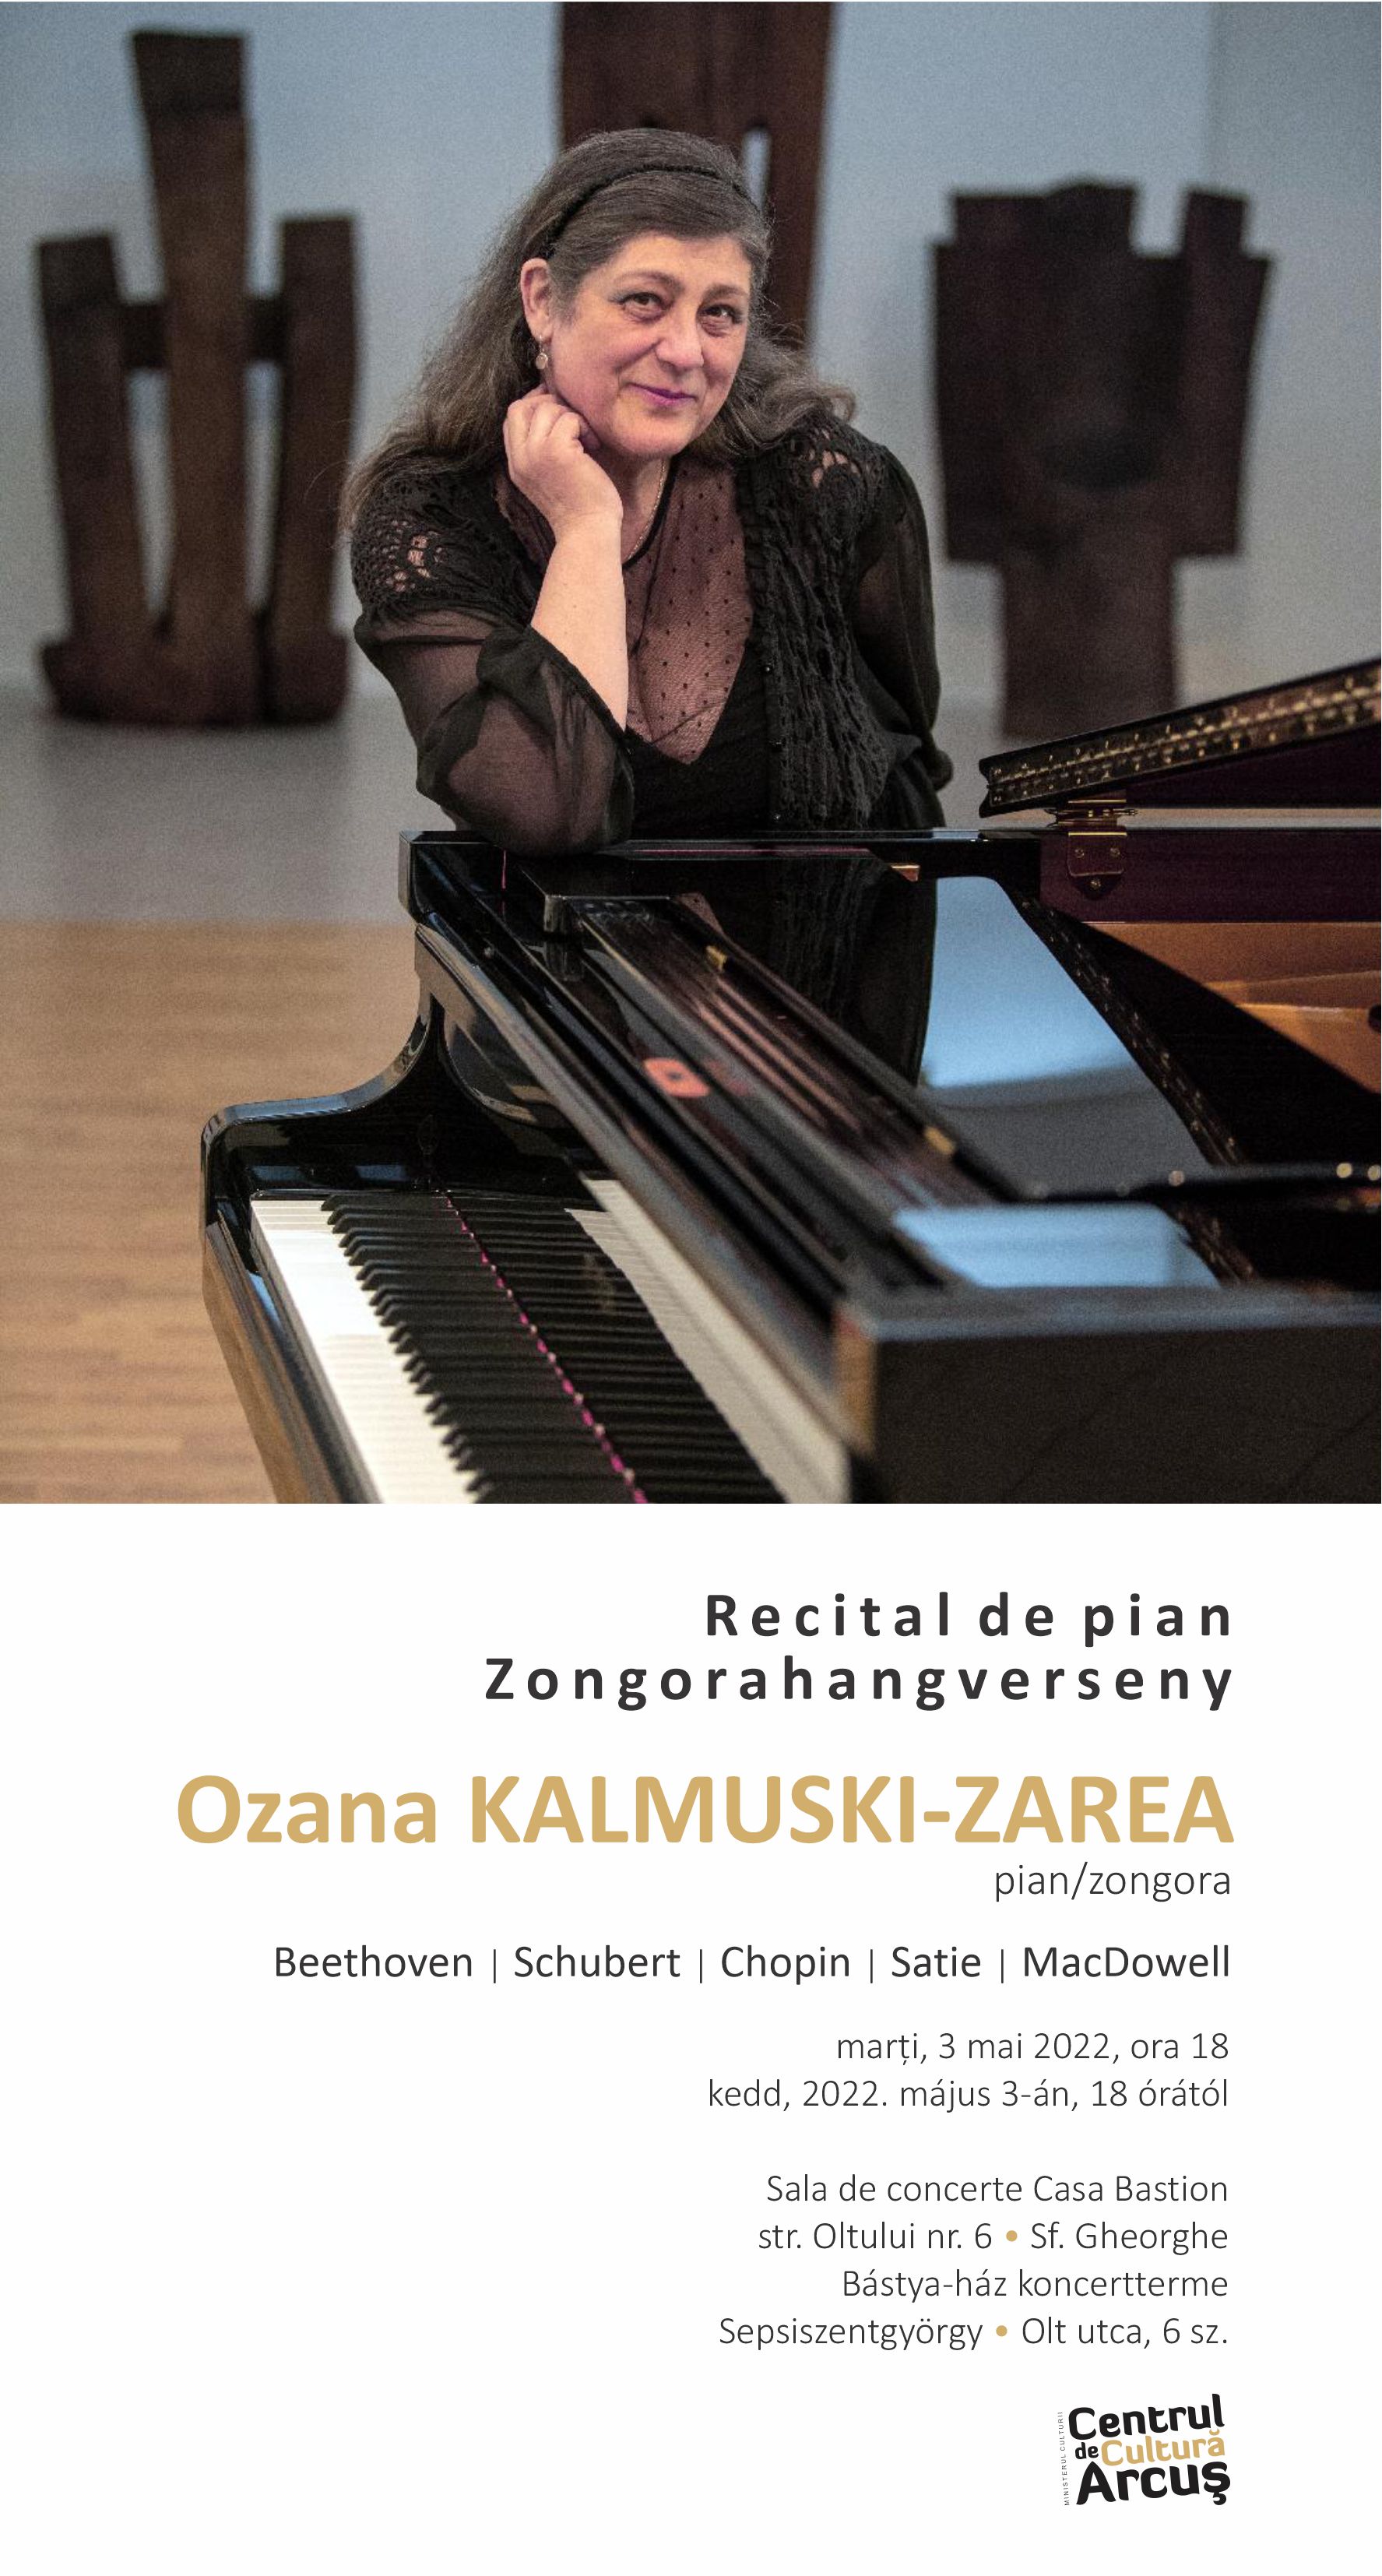 Ozana KALMUSKI-ZAREA - PIANO RECITAL